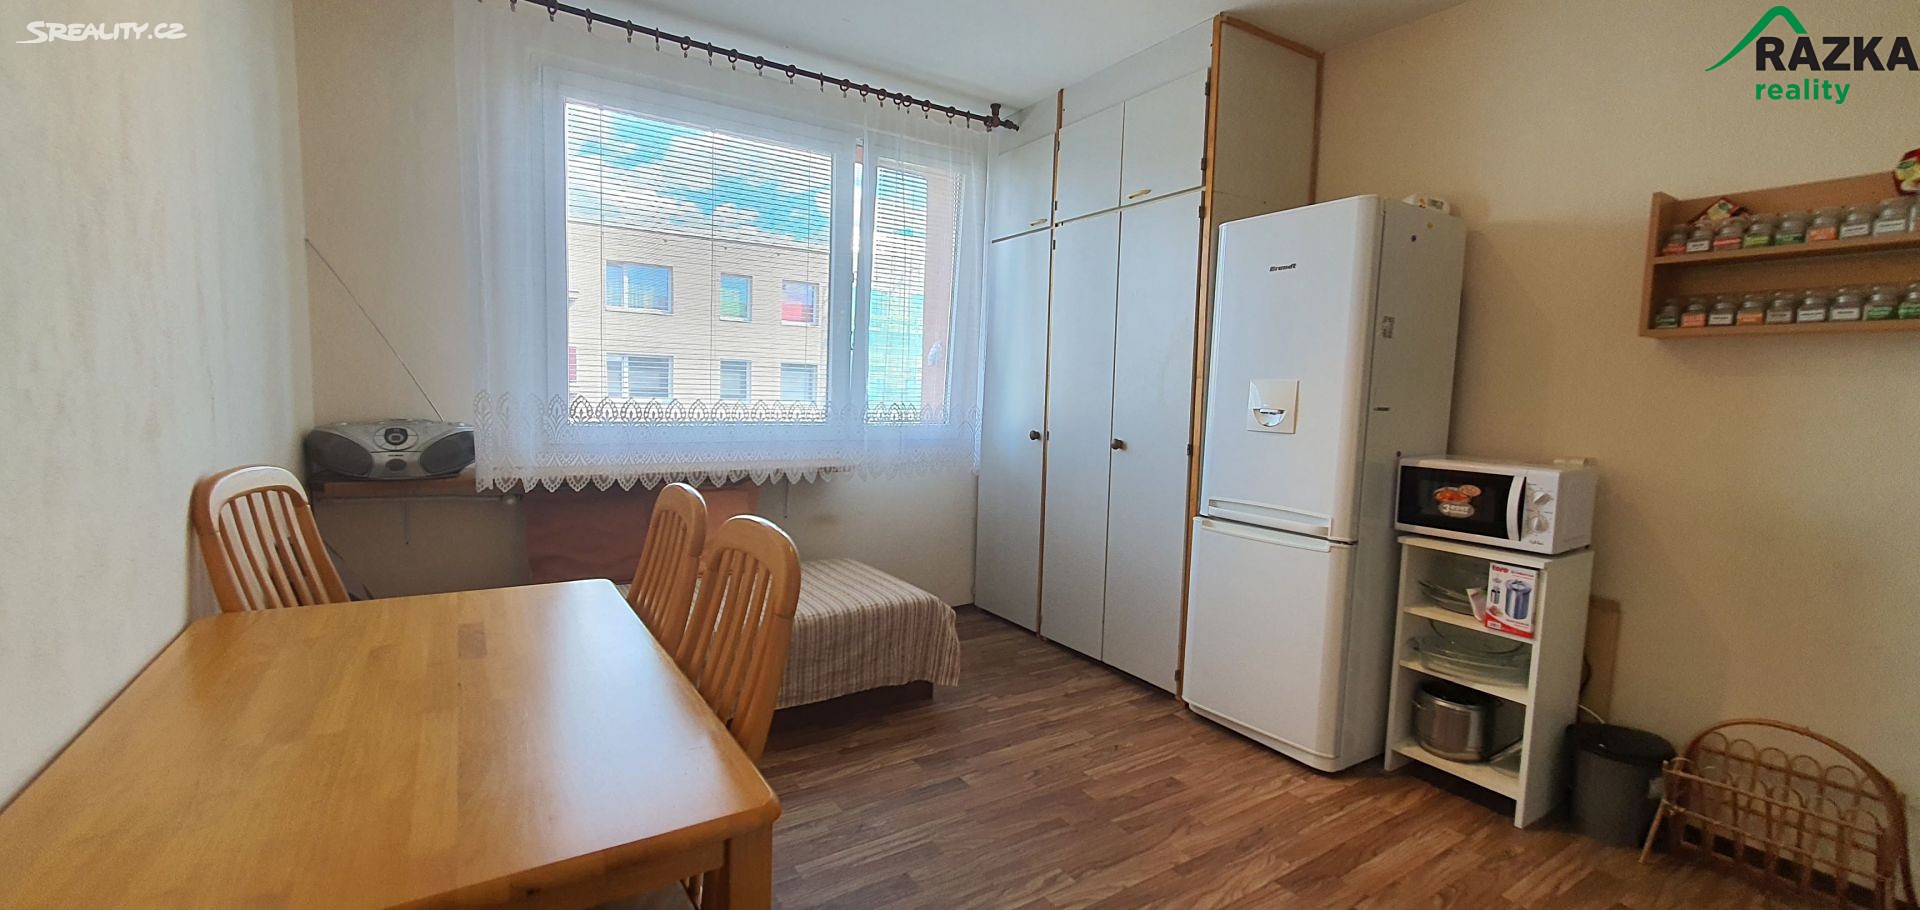 Prodej bytu 1+1 47 m², Borská, Bor